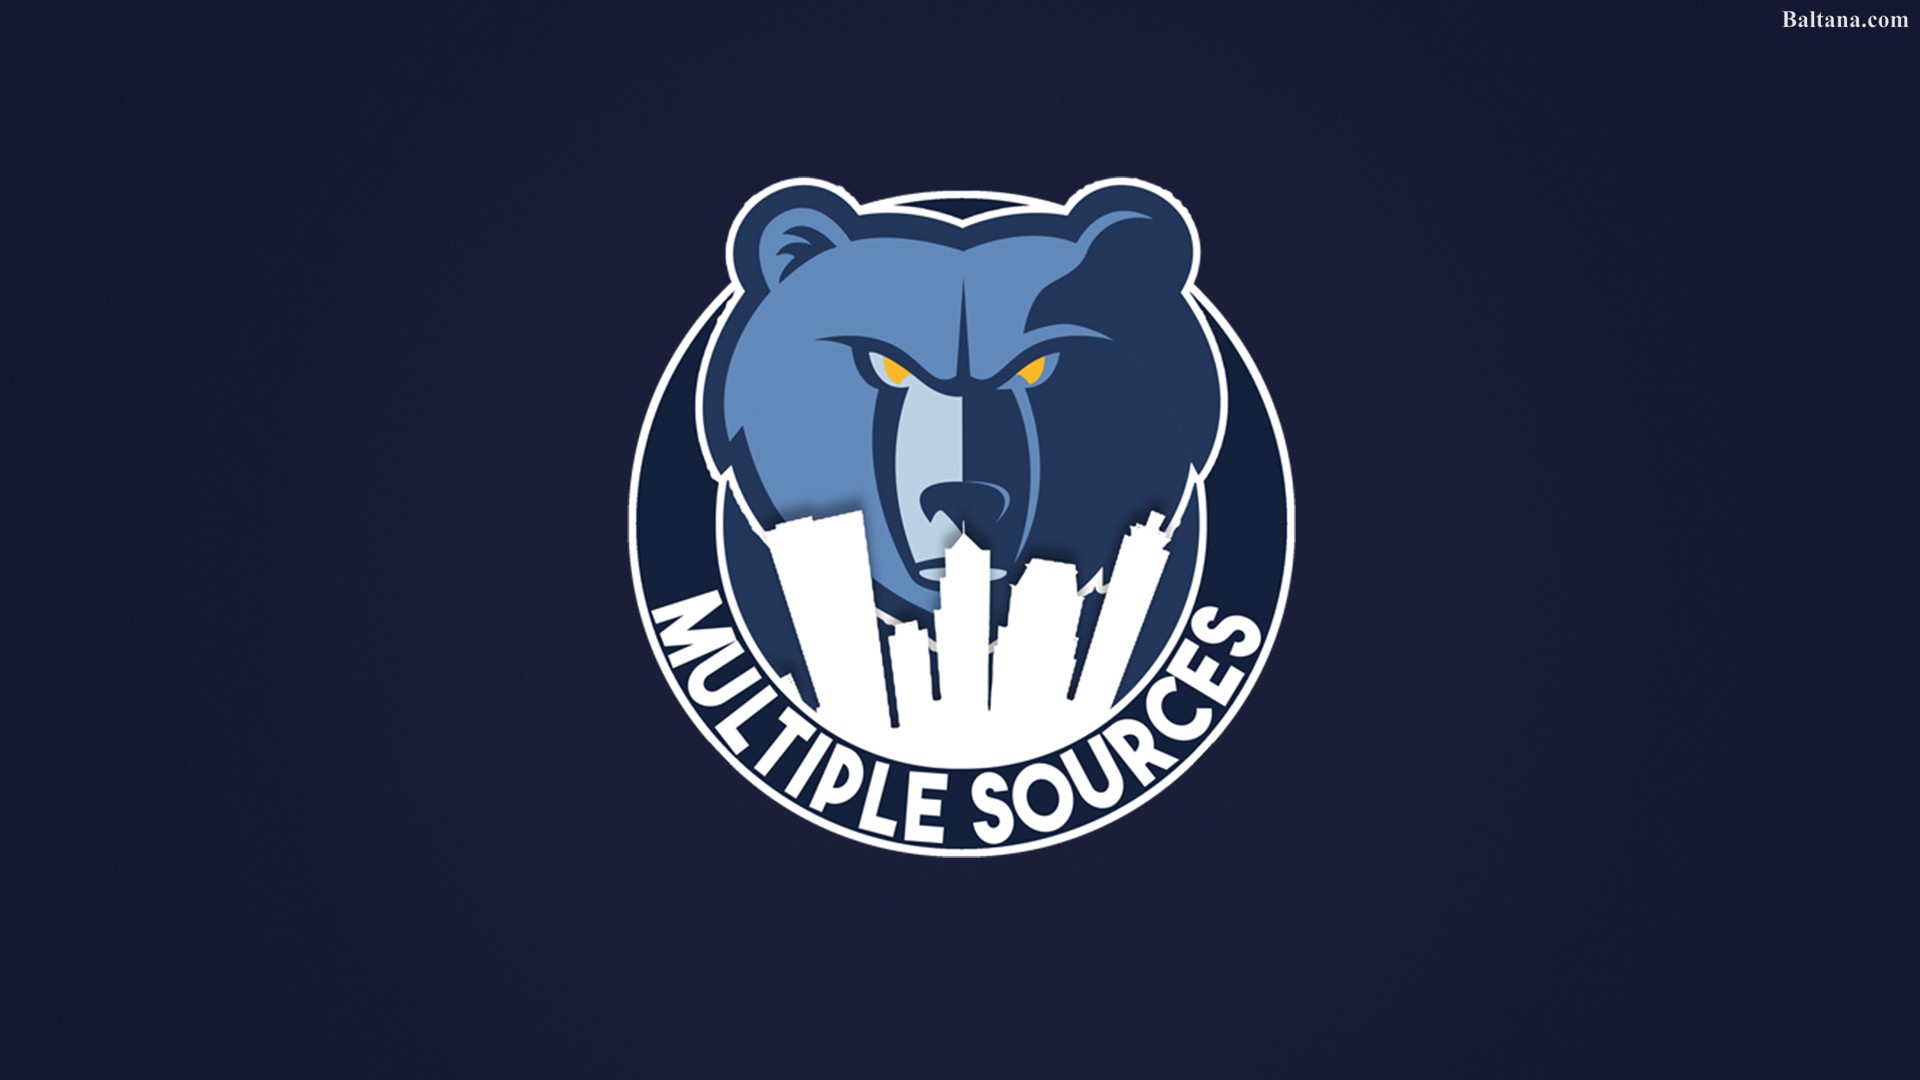 Memphis Grizzlies , HD Wallpaper & Backgrounds